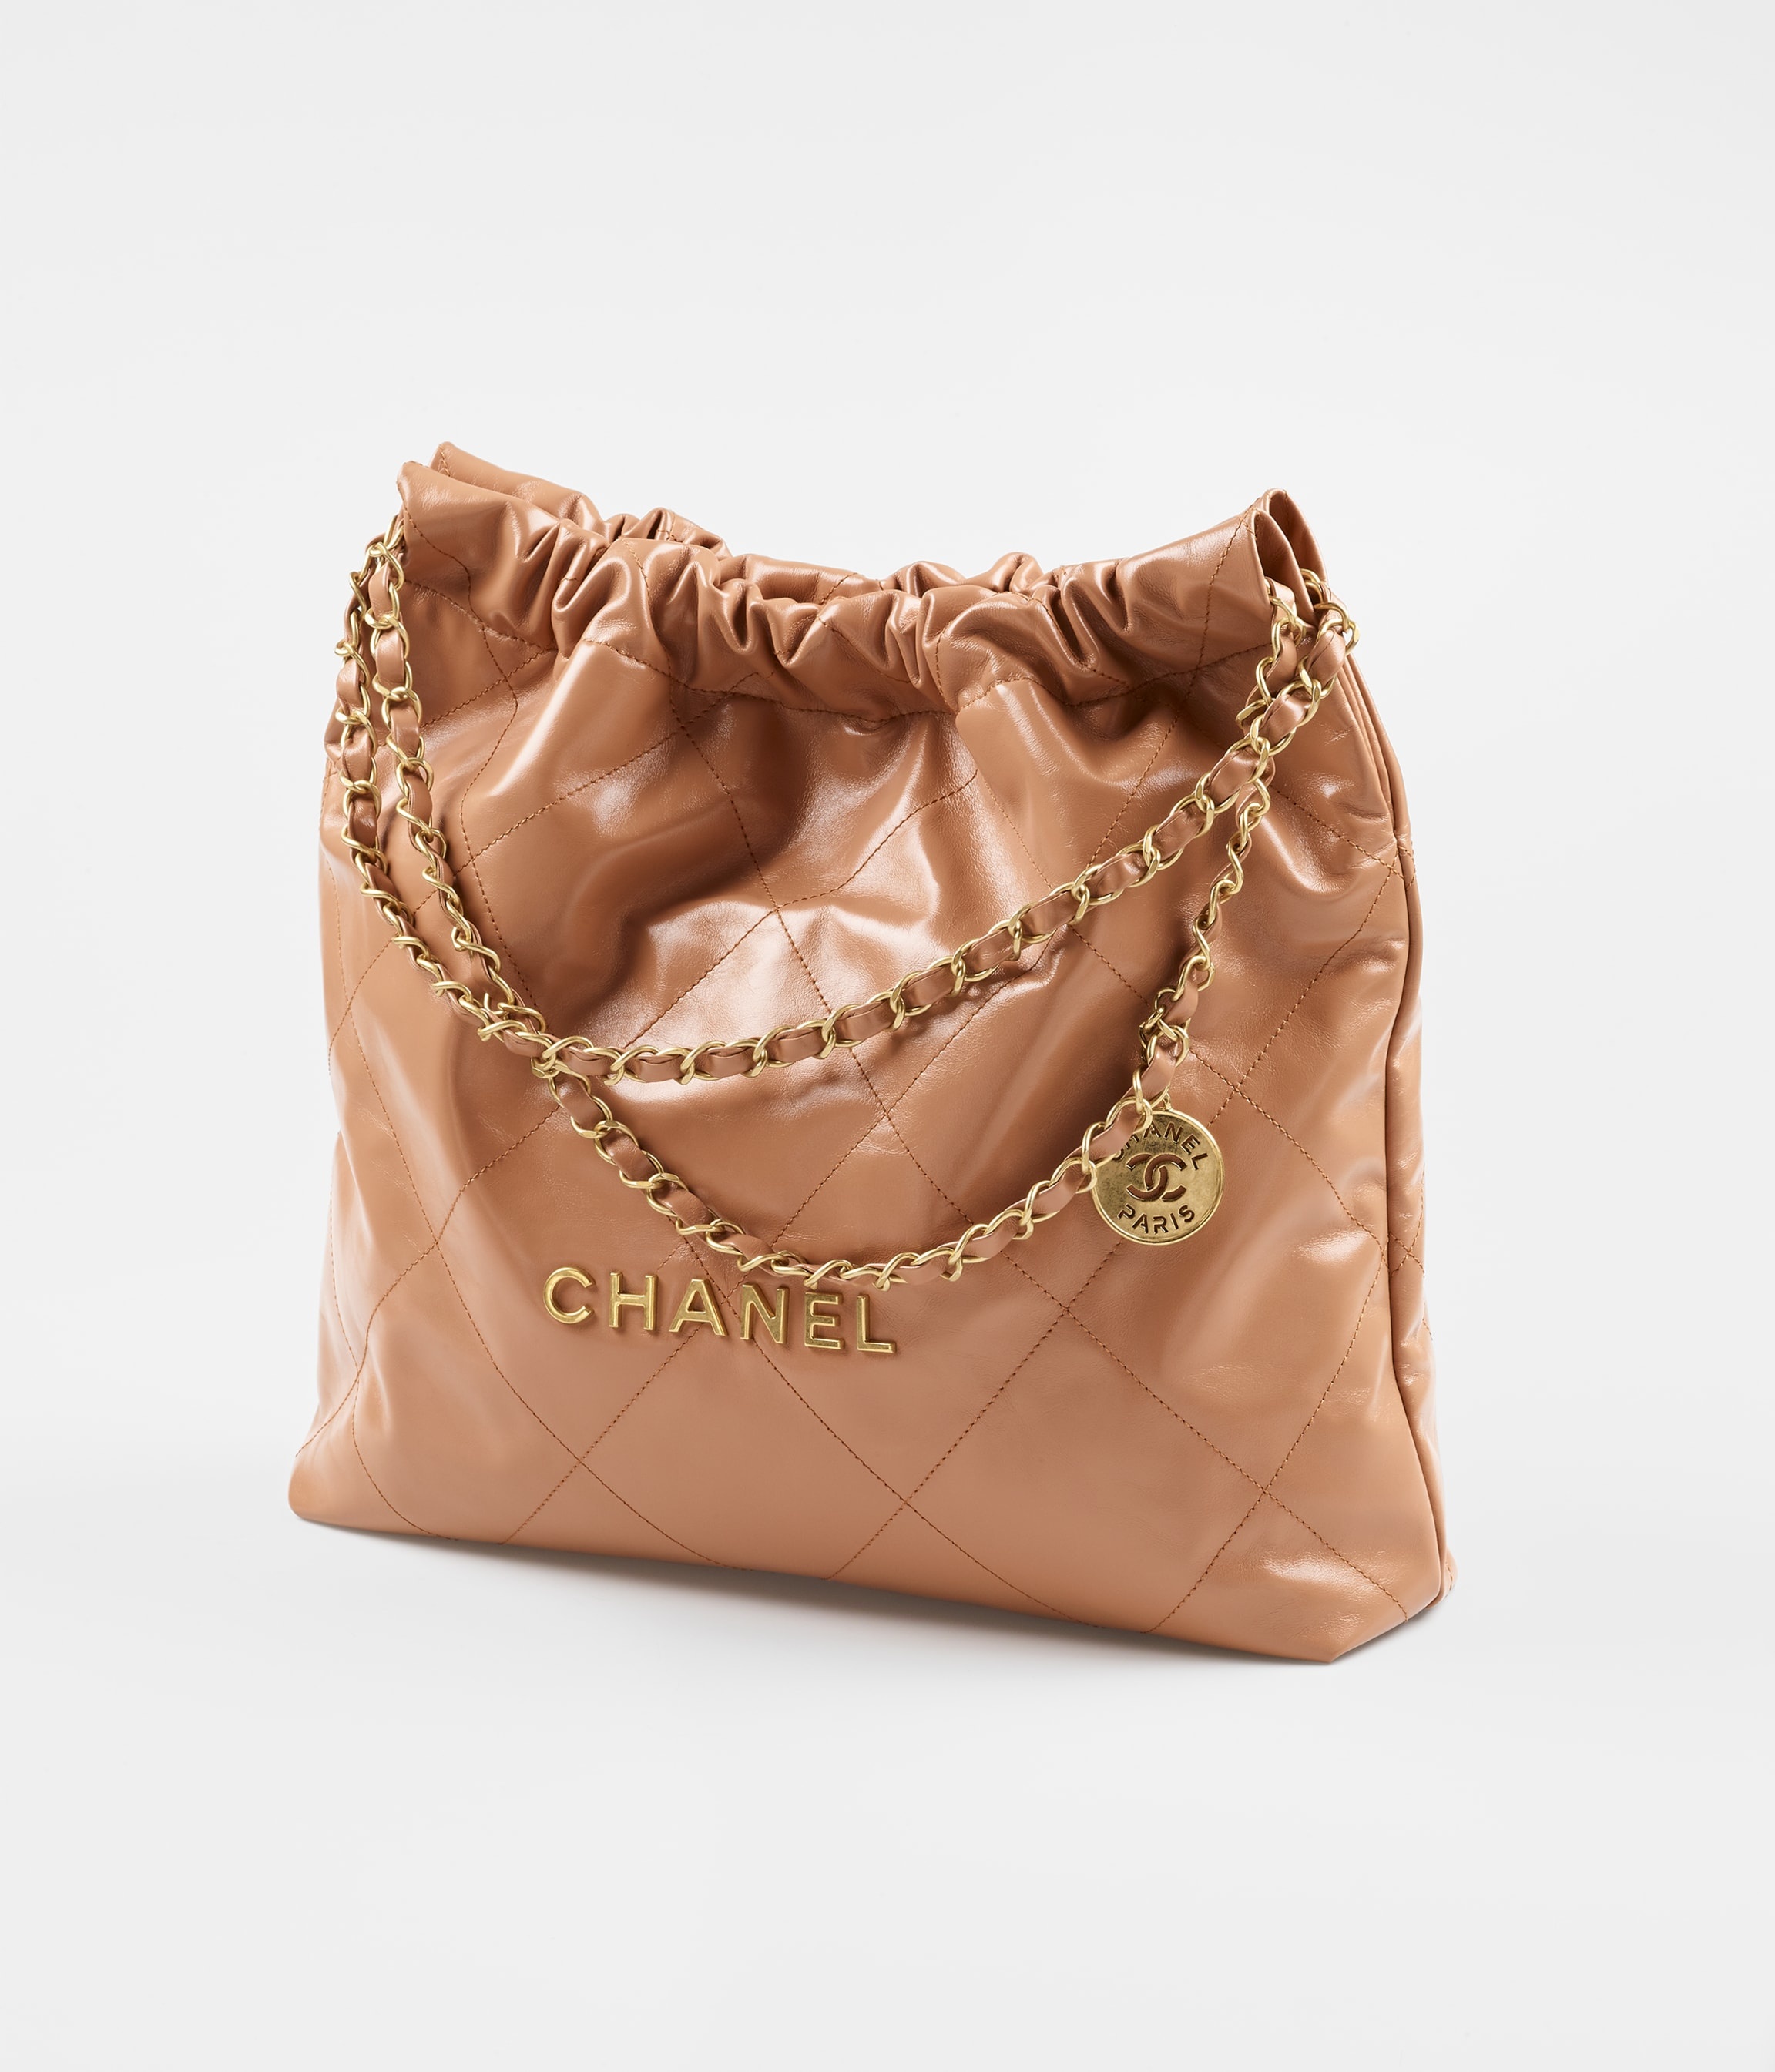 CHANEL 22 Handbag - 2